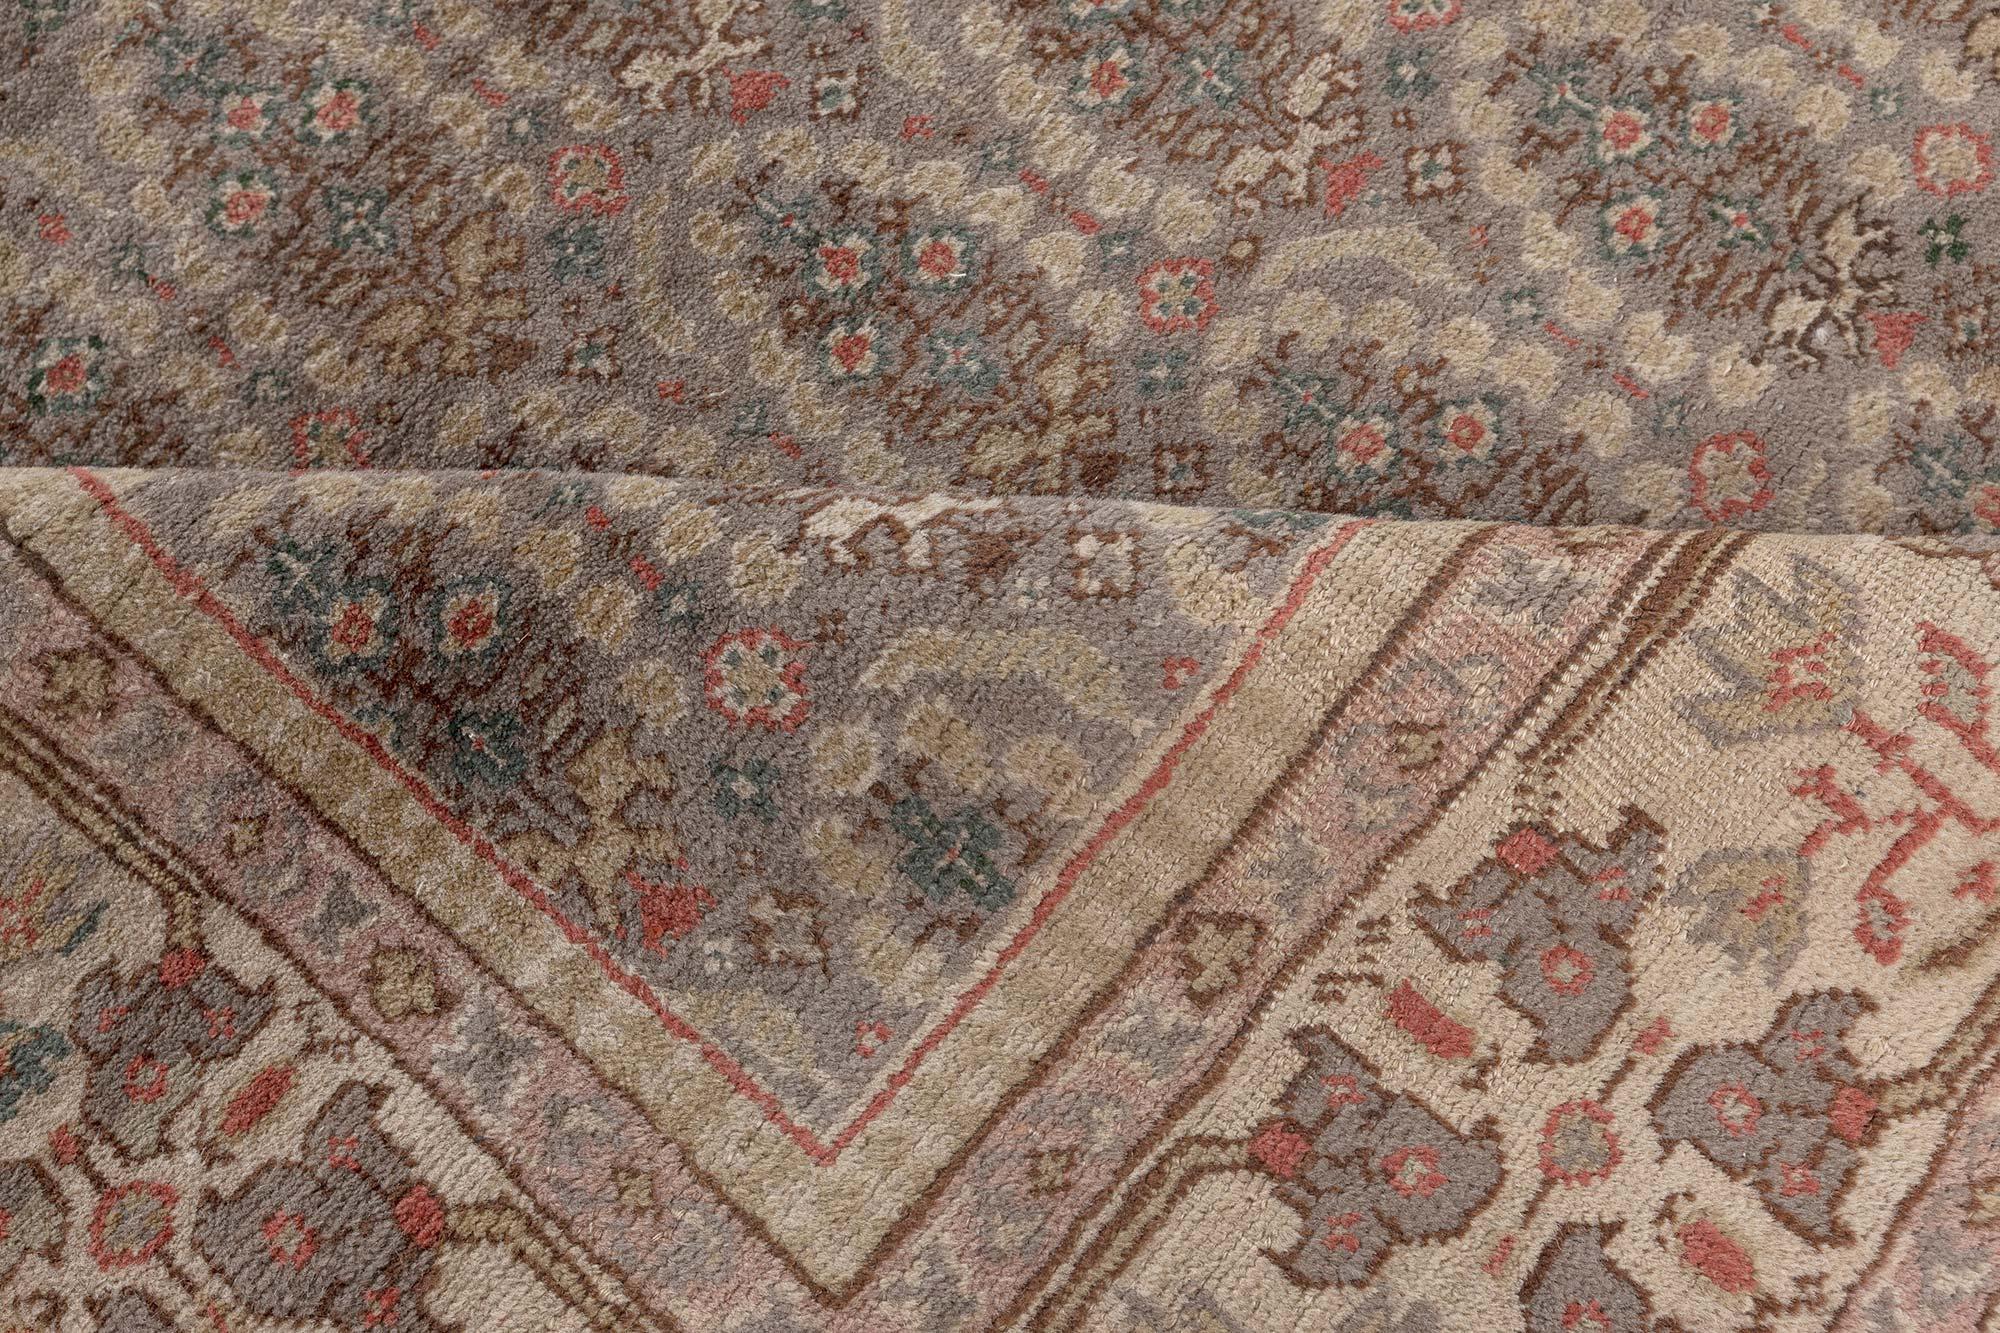 Mid-20th Century Persian Tabriz rug
Size: 7'9